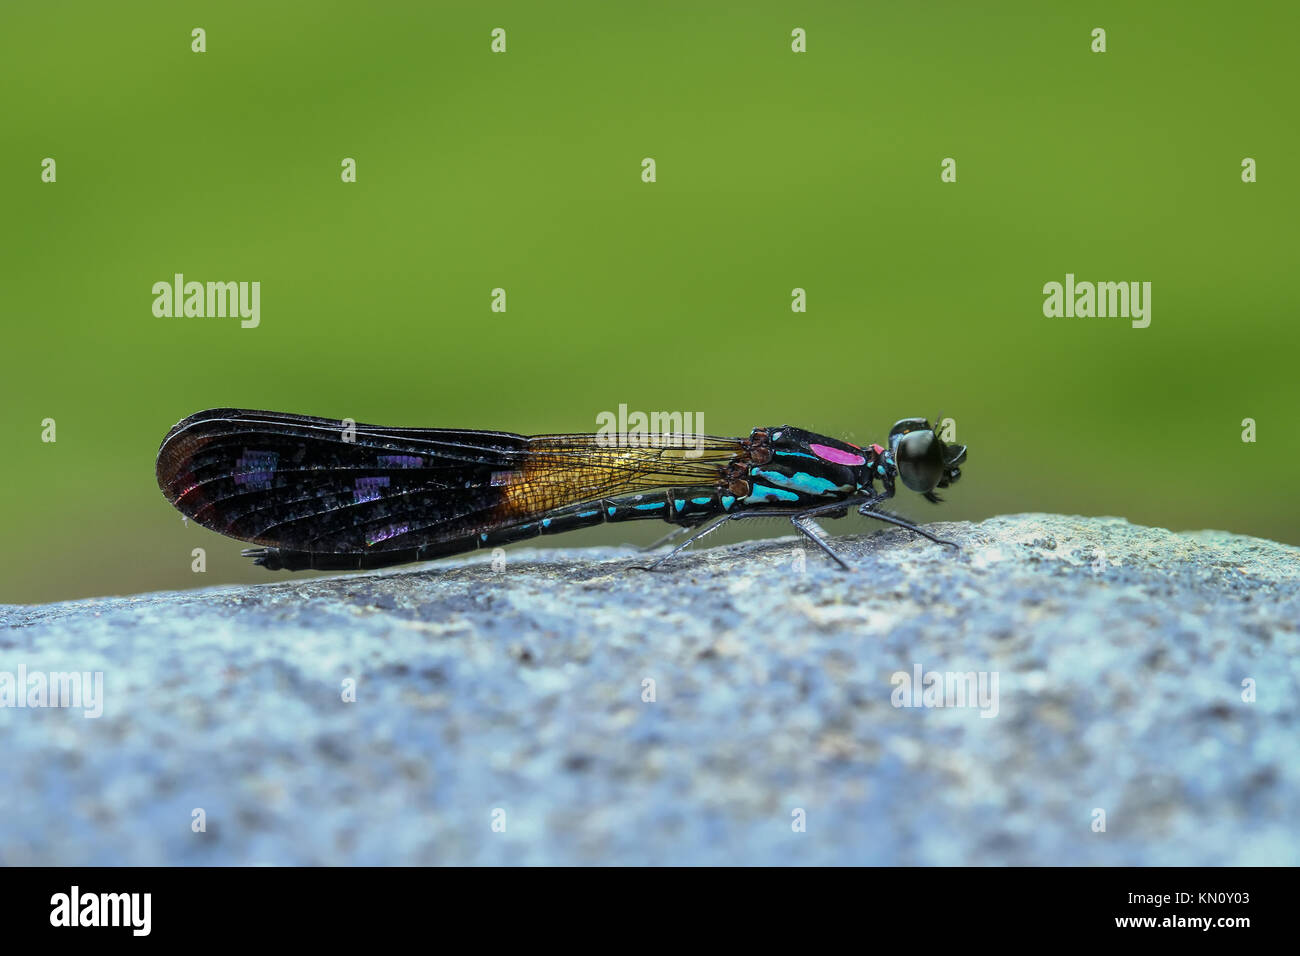 Blau Rosa Damselfy/Dragon Fly/Zygoptera sitzen auf dem River Rock / Stein Stockfoto